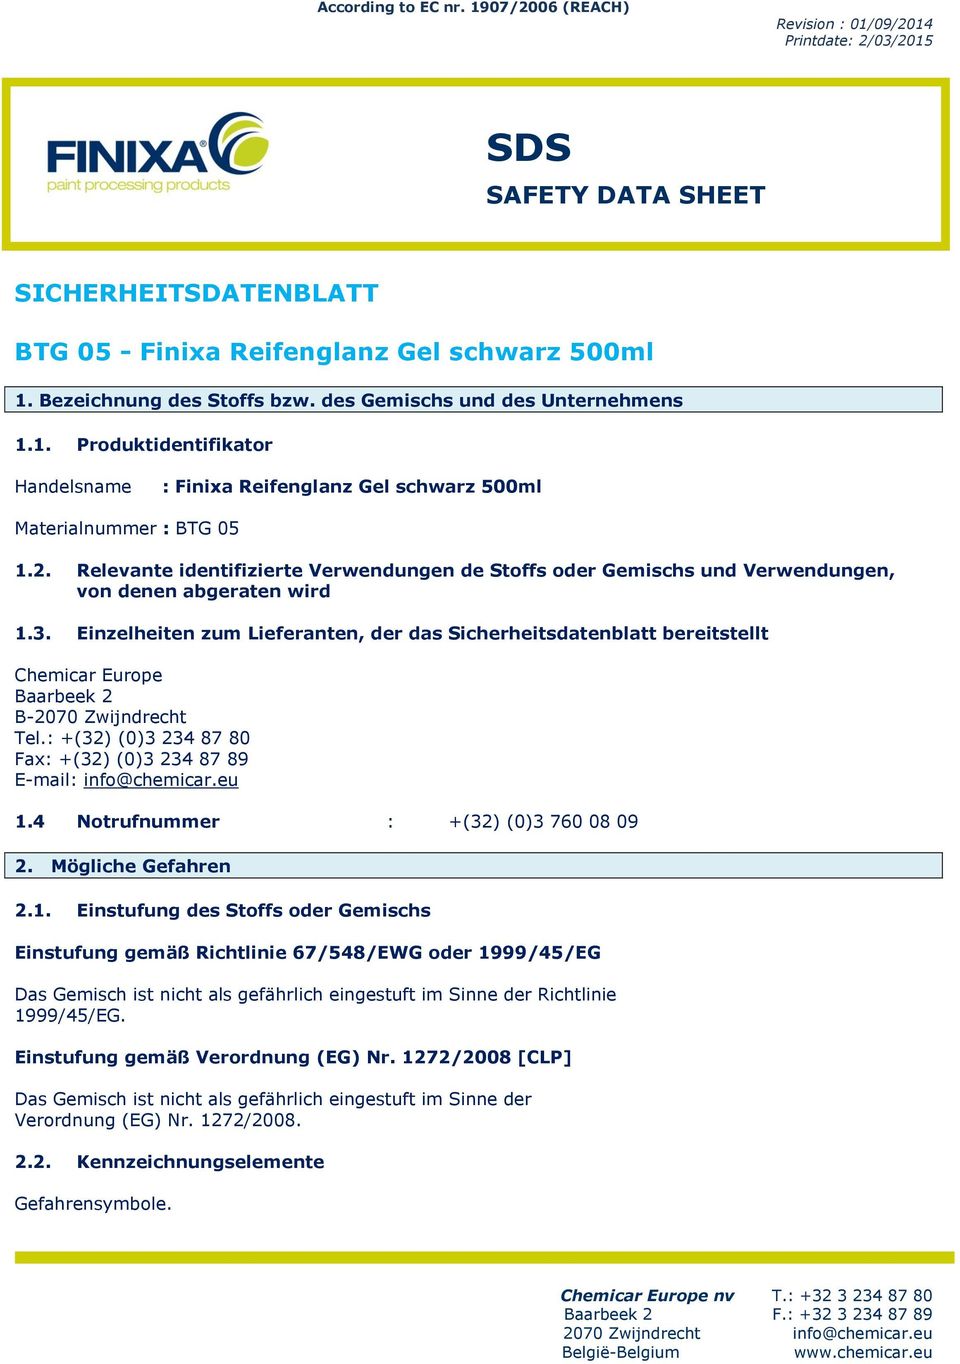 Einzelheiten zum Lieferanten, der das Sicherheitsdatenblatt bereitstellt Chemicar Europe Baarbeek 2 B-2070 Zwijndrecht Tel.: +(32) (0)3 234 87 80 Fax: +(32) (0)3 234 87 89 E-mail: info@chemicar.eu 1.